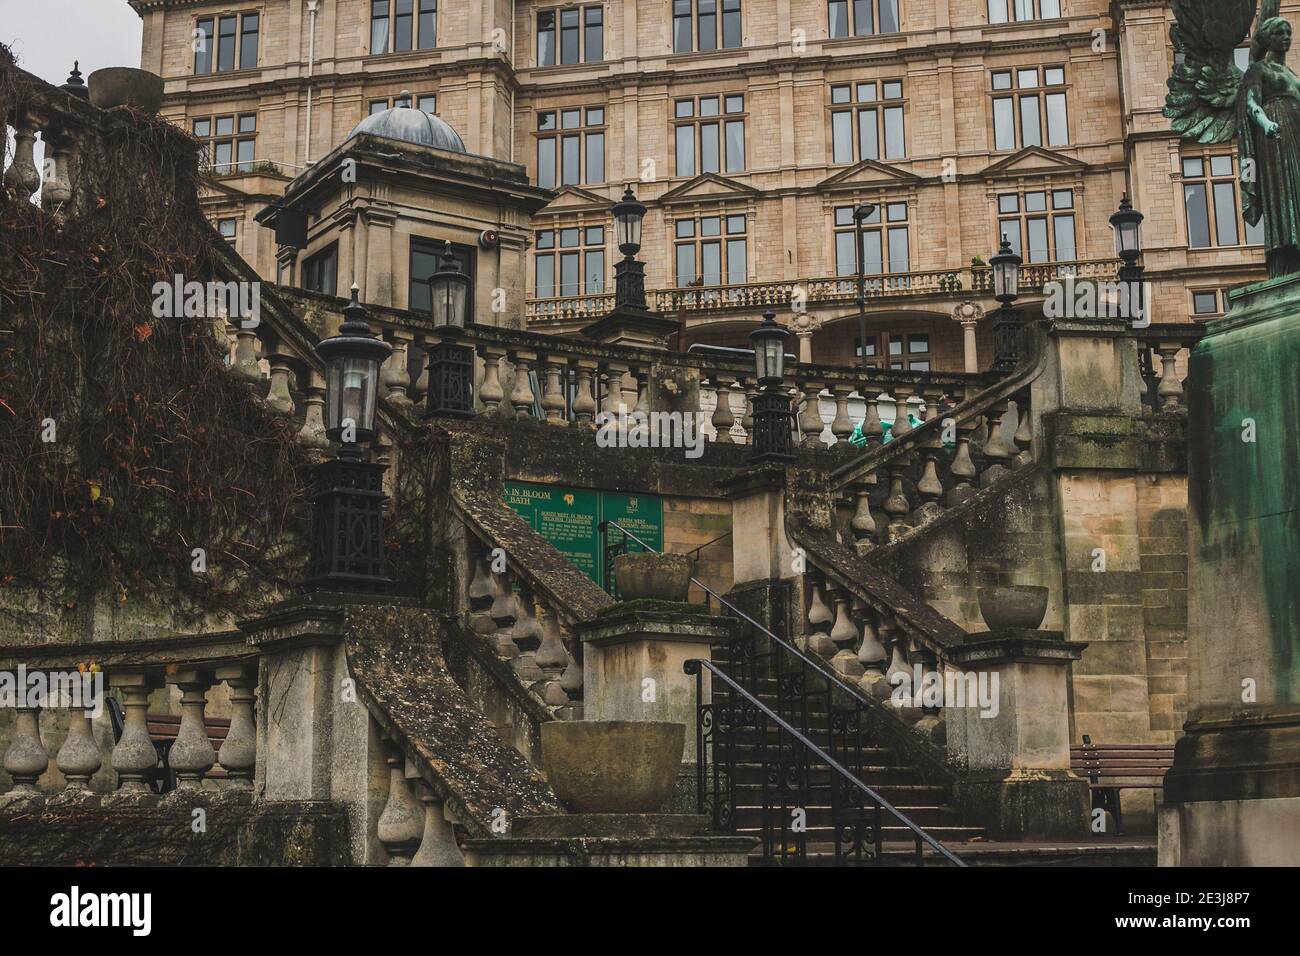 Staircase at Parade Gardens in Bath, Somerset, England, UK. Stock Photo